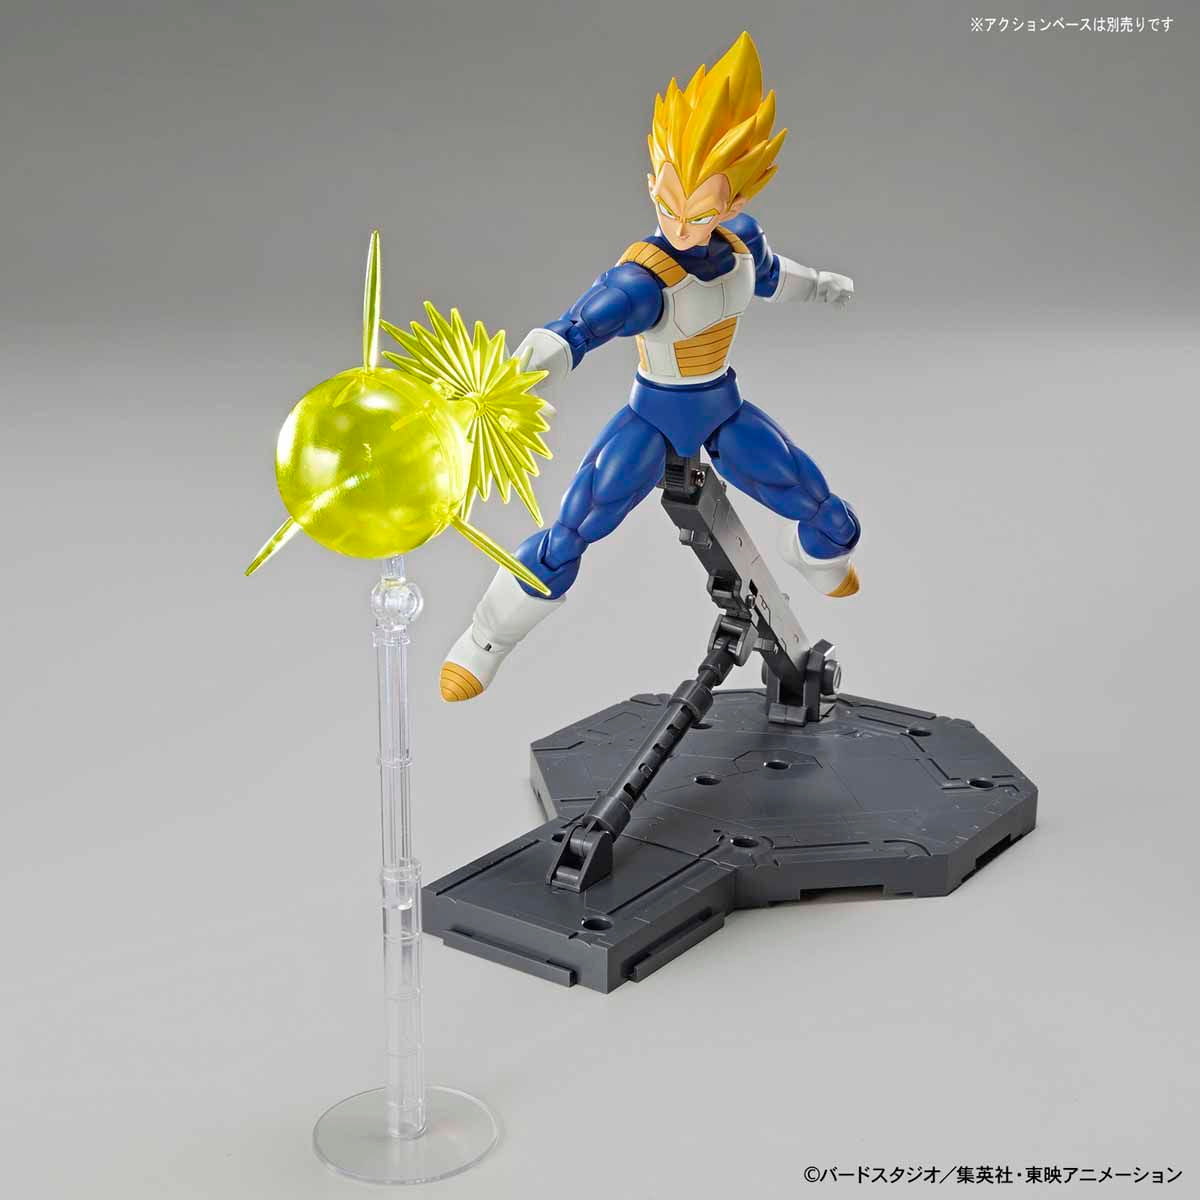 Dragon Ball - Super Saiyan Vegeta - Figure-rise Standard Model Kit, Includes Big Bang Attack and Final Flash effect parts, Stands at 145mm, Nippon Figures